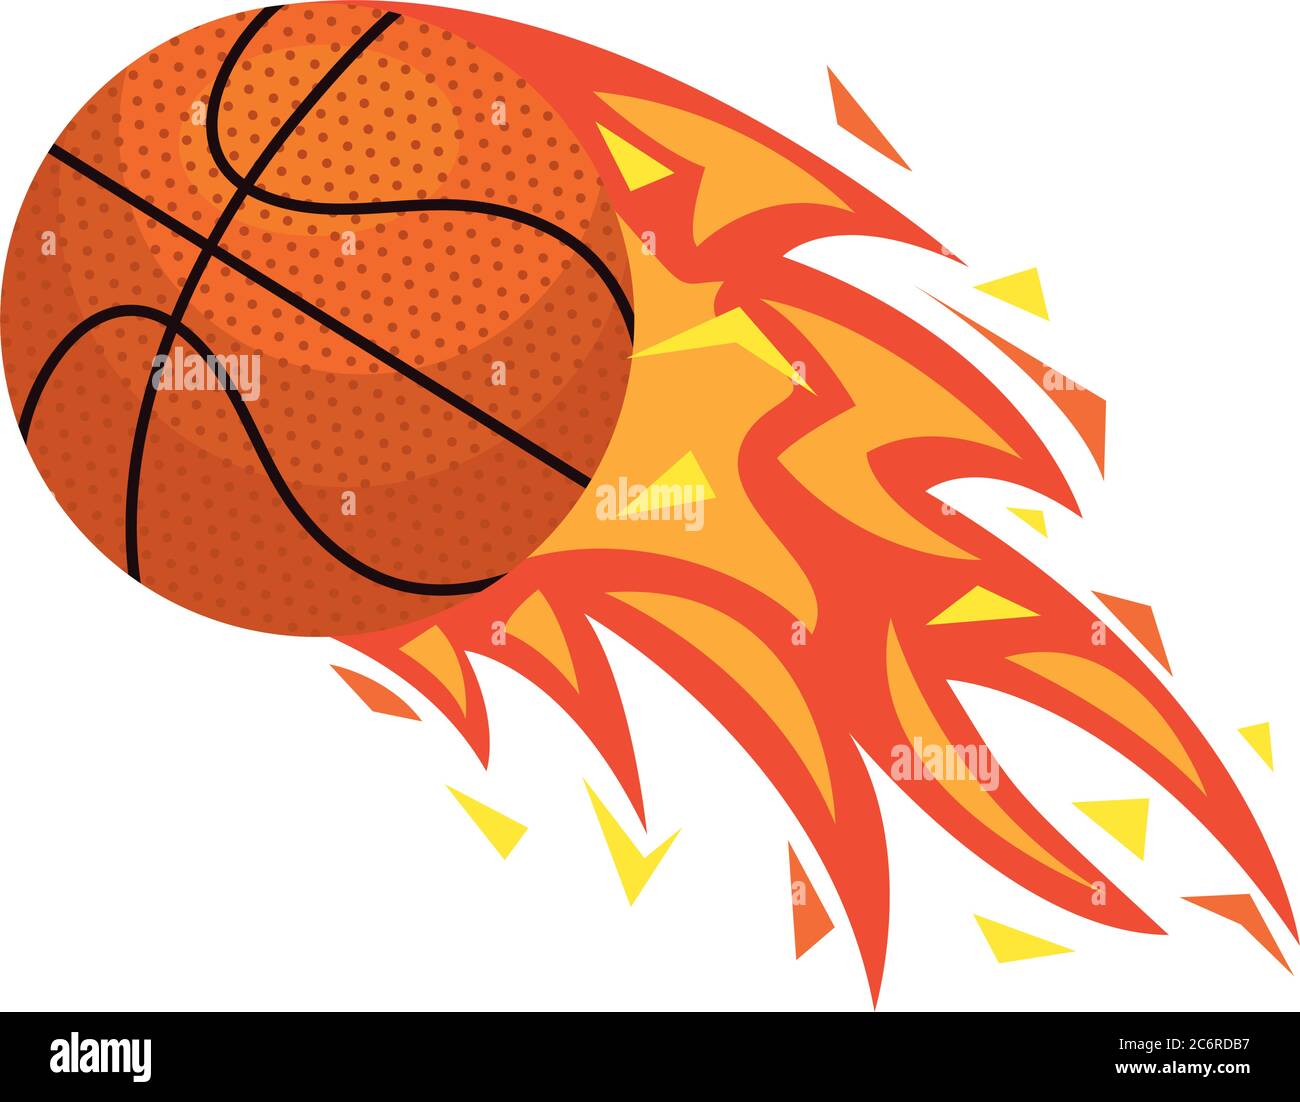 pelota de baloncesto en llamas sobre fondo blanco Imagen Vector de stock -  Alamy